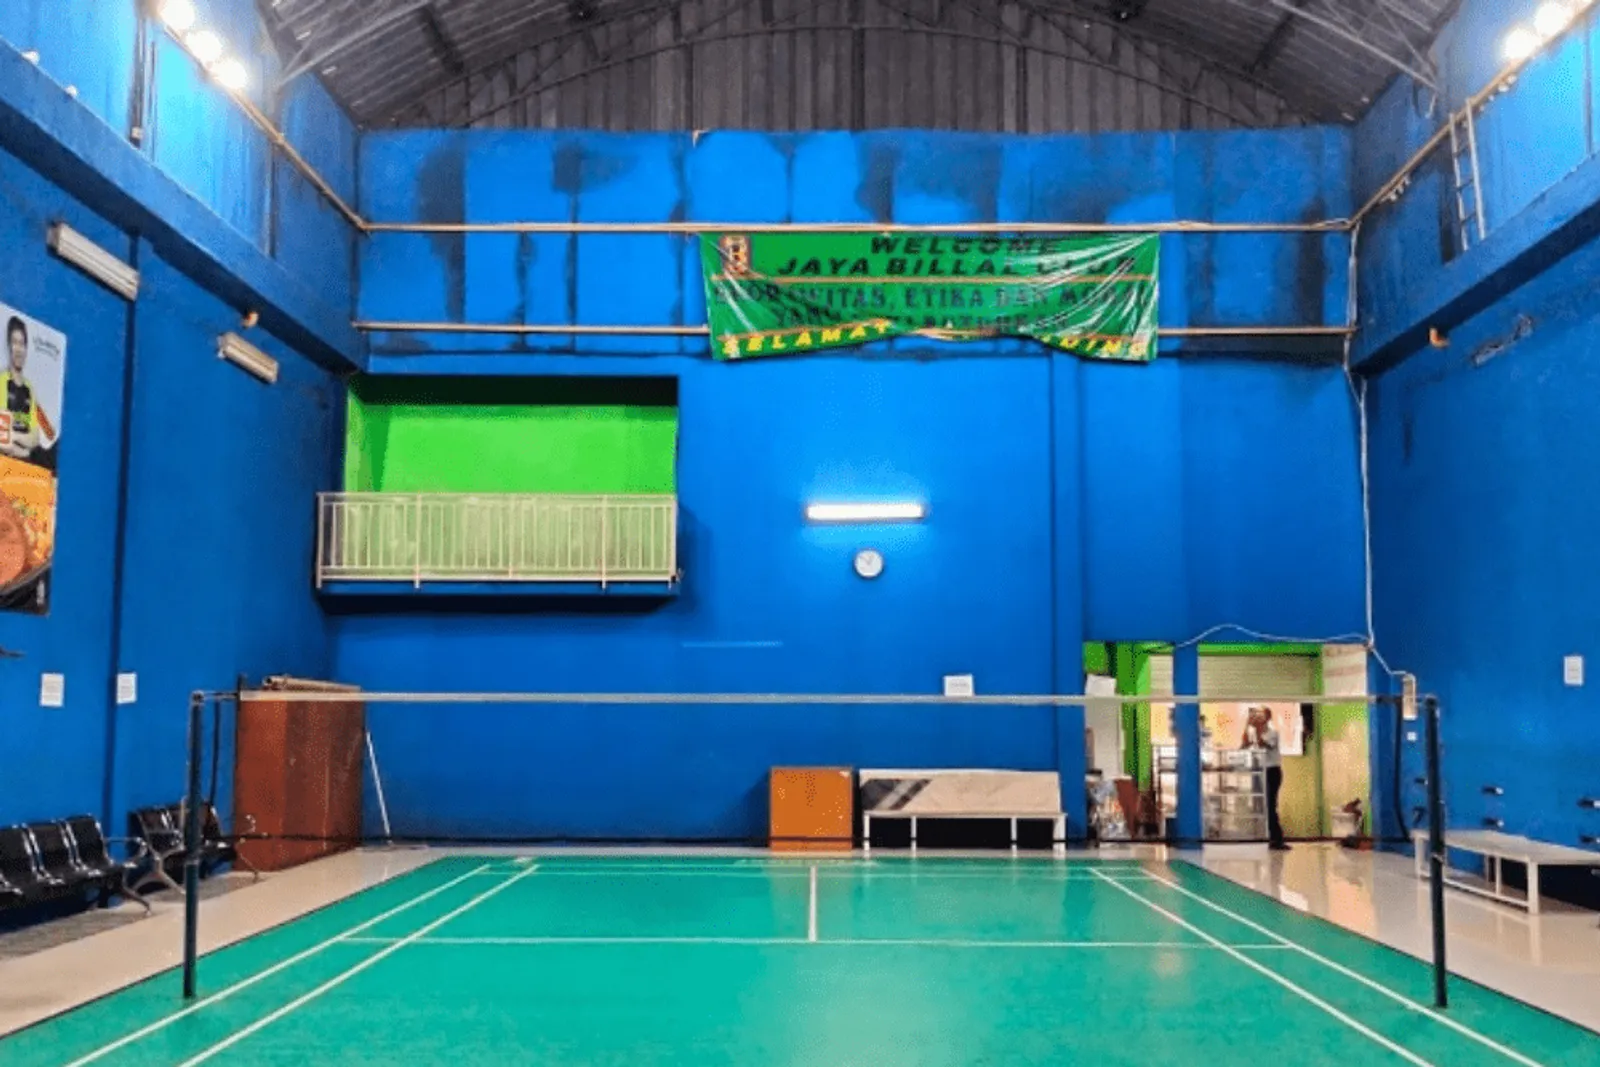 Lokasi Strategis, Inilah 9 Lapangan Badminton di Jakarta Selatan